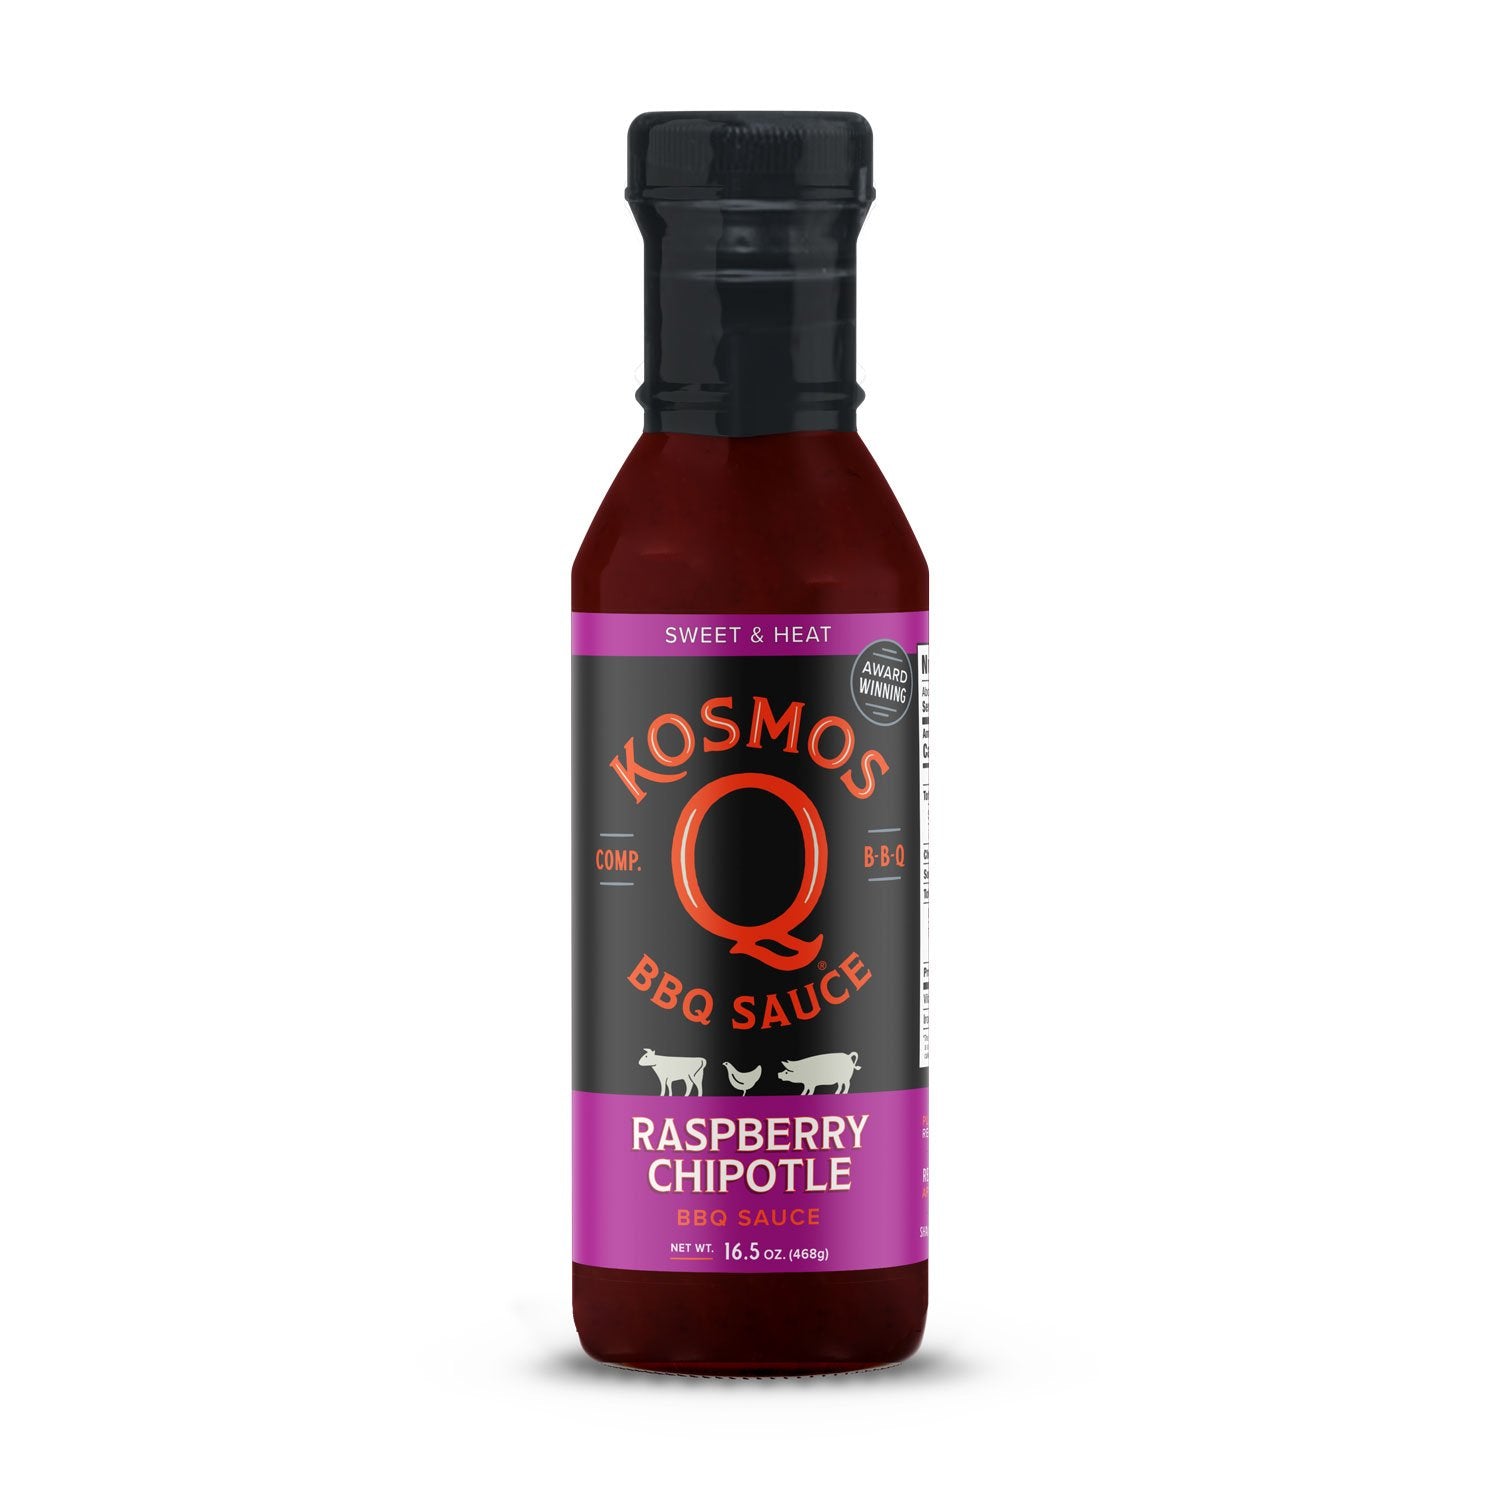 Kosmo's Q BBQ Sauce Raspberry Chipotle BBQ Sauce